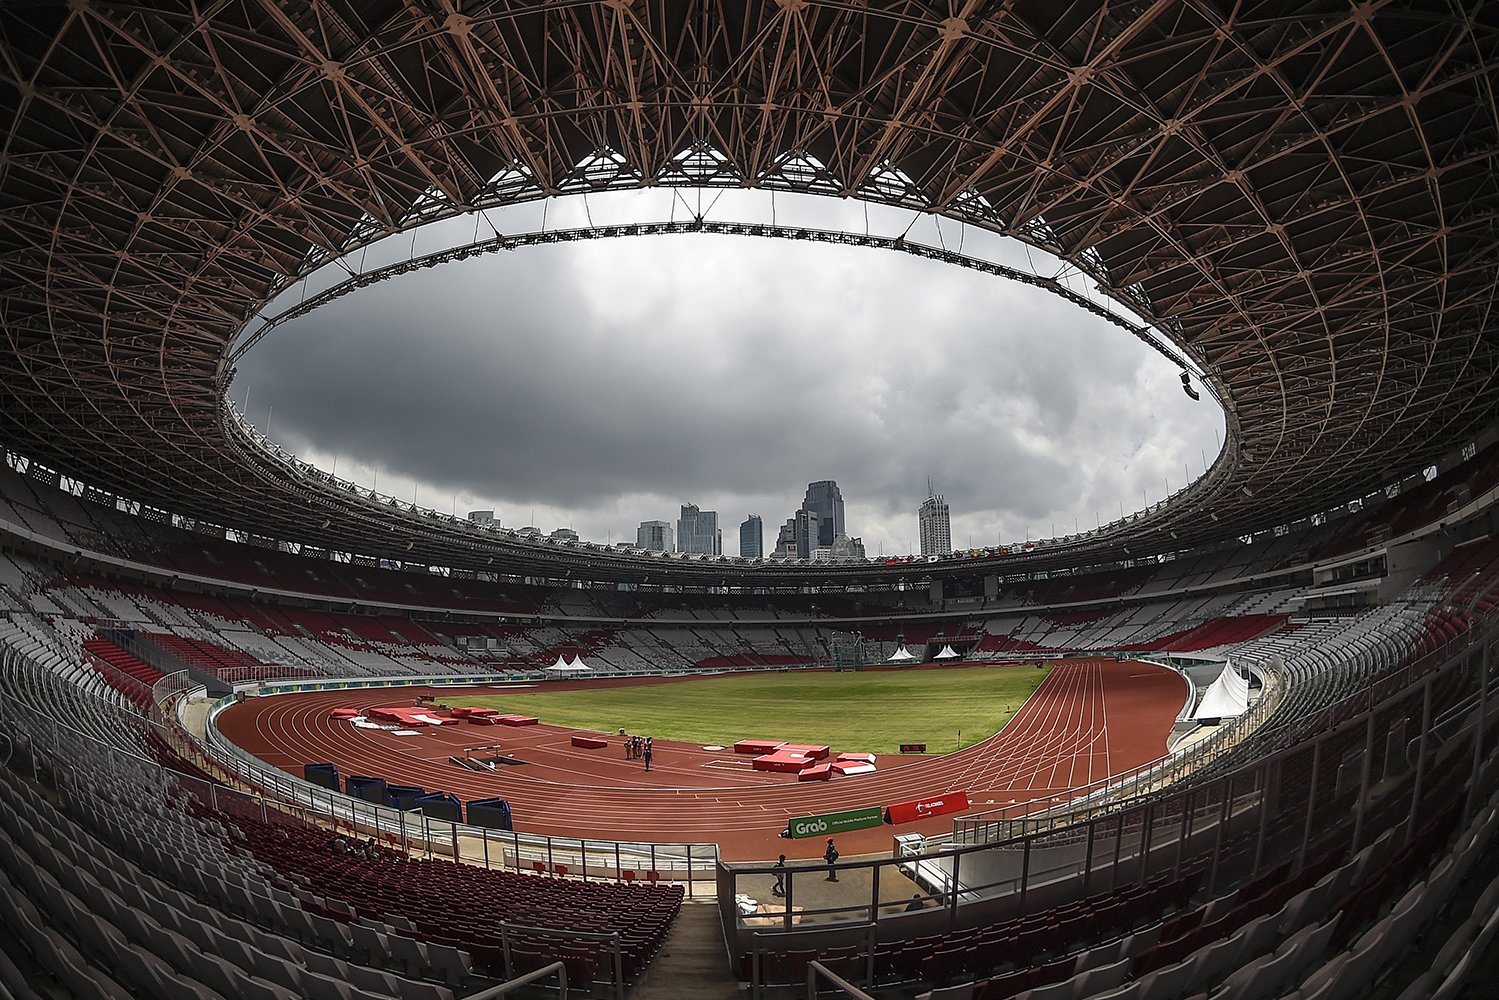 Suasana Stadion Utama Gelora Bung Karno yang dipersiapkan untuk perlombaan cabang atletik 18th Asian Games Invitation Tournament di Senayan, Jakarta, Jumat (9/2). Cabang atletik yang mempertandingkan 40 nomor tersebut akan digelar mulai 11 hingga 14 Februari 2018. 